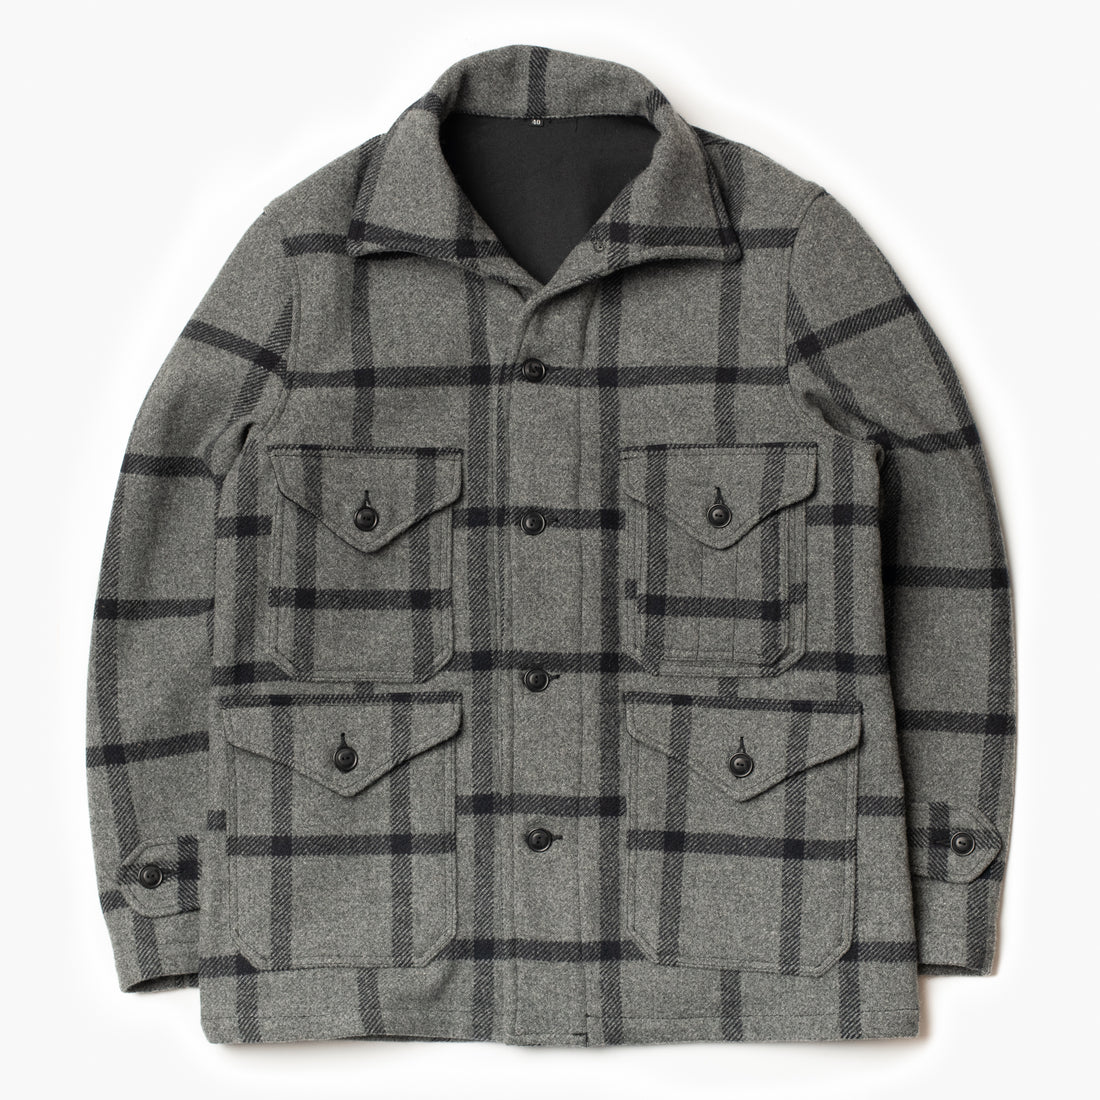 Bryceland's Hunting Jacket Black/Grey Plaid Wool